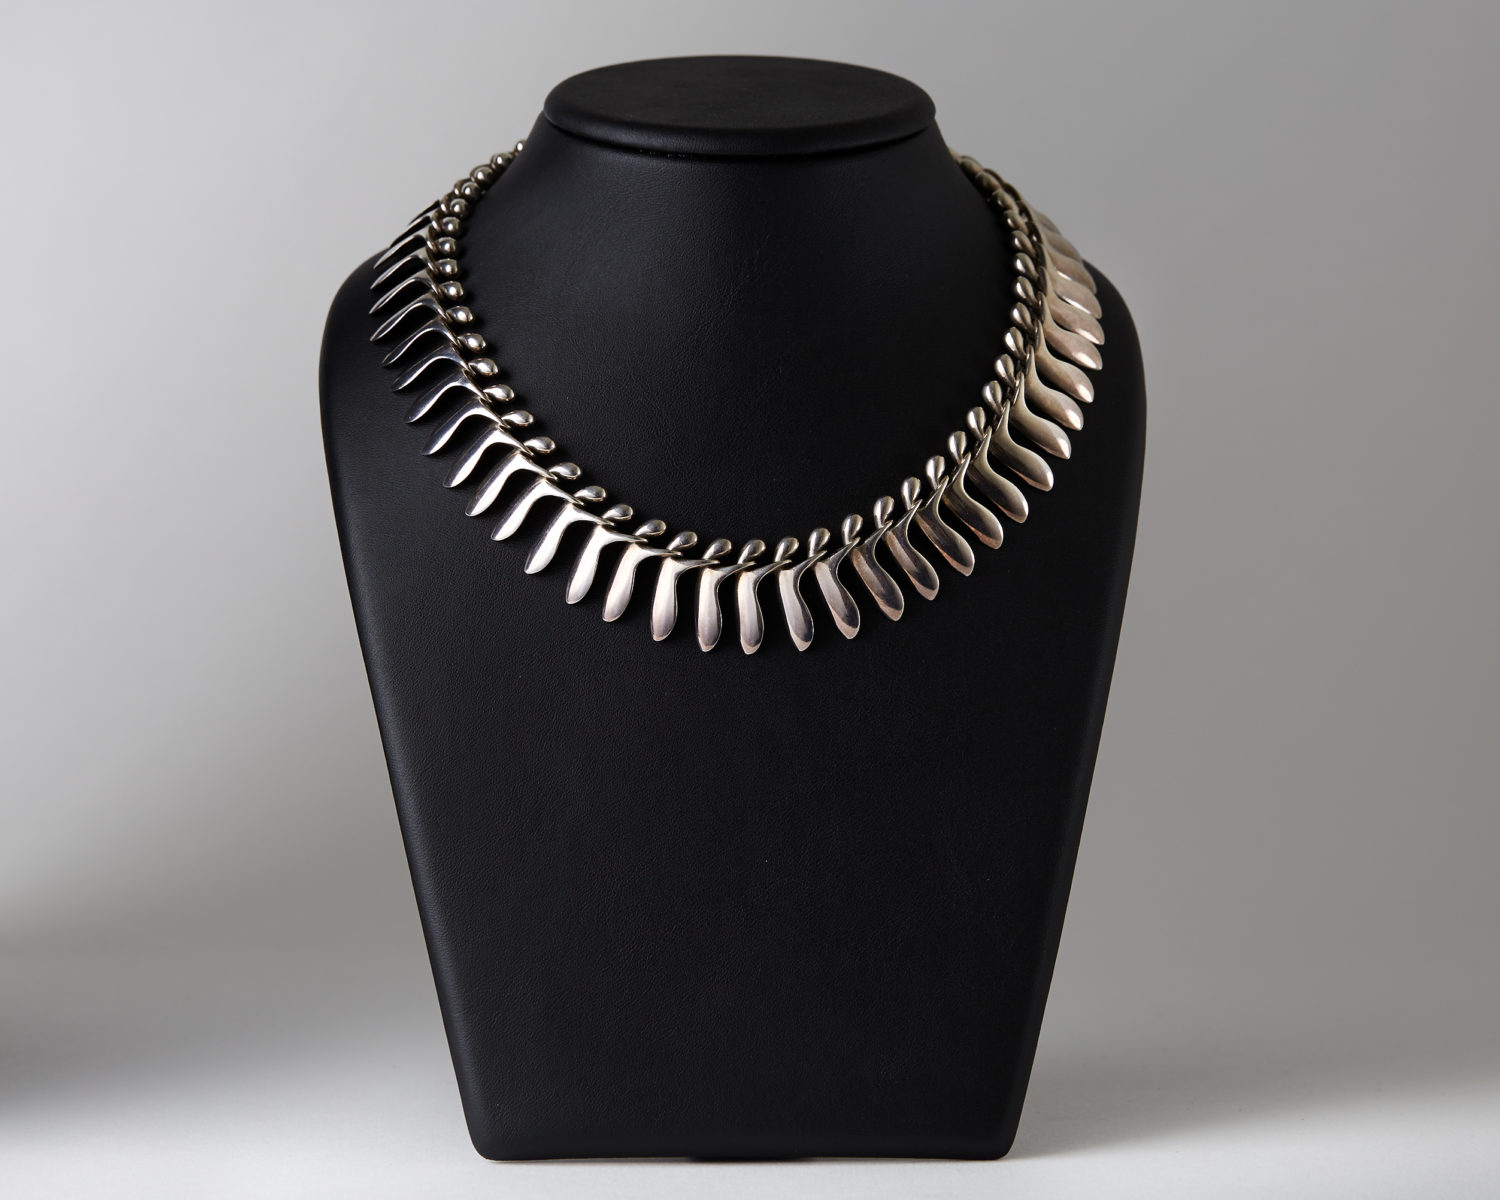 Necklace designed by Bent Gabrielsen for Georg Jensen, — Modernity